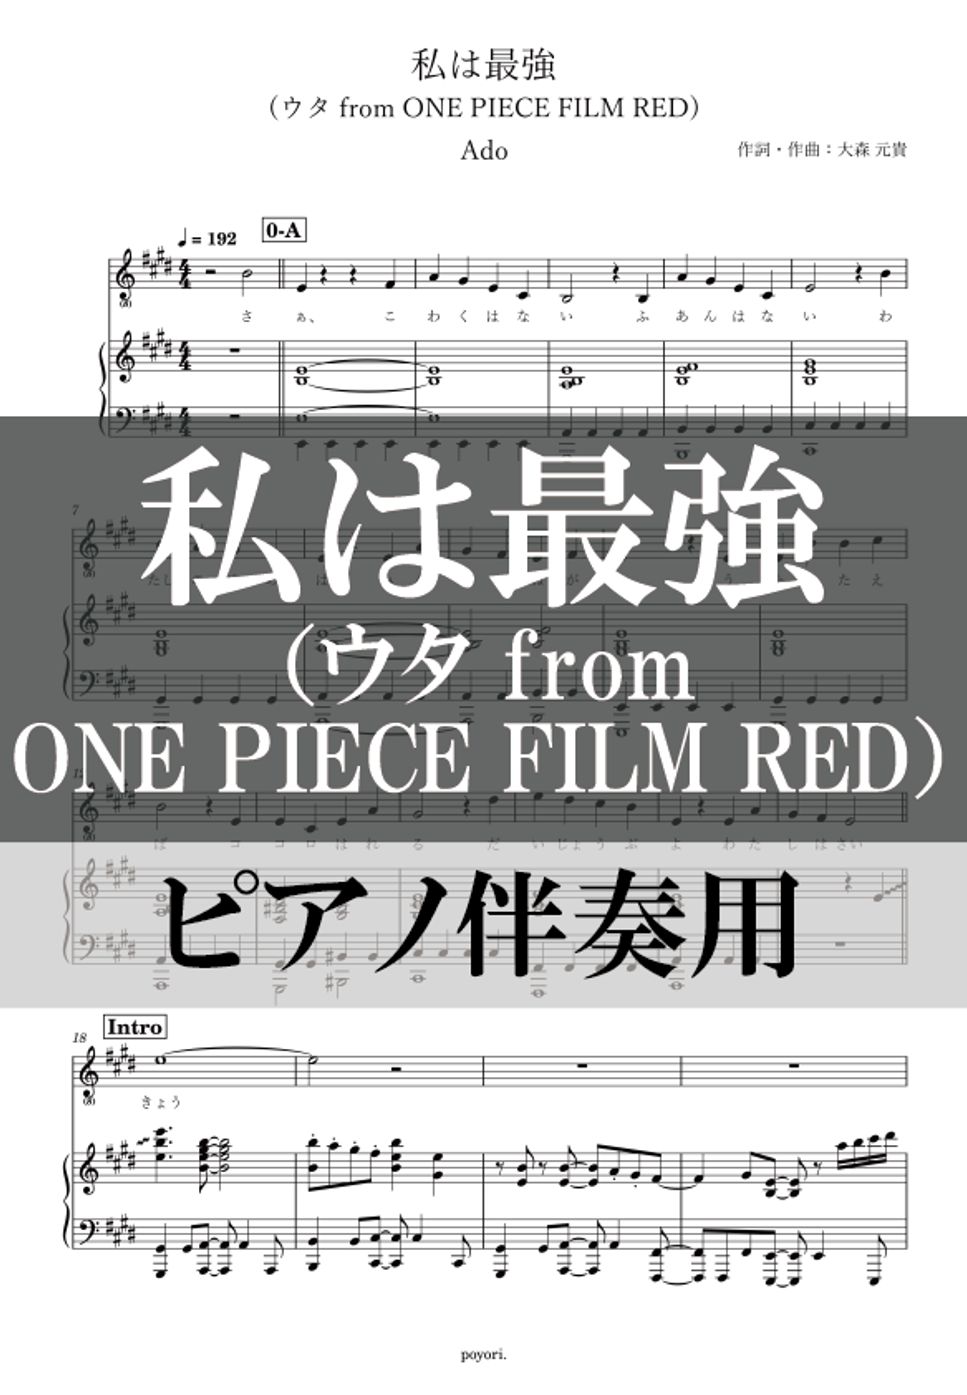 Ado - 私は最強 (ピアノ伴奏) by poyori.